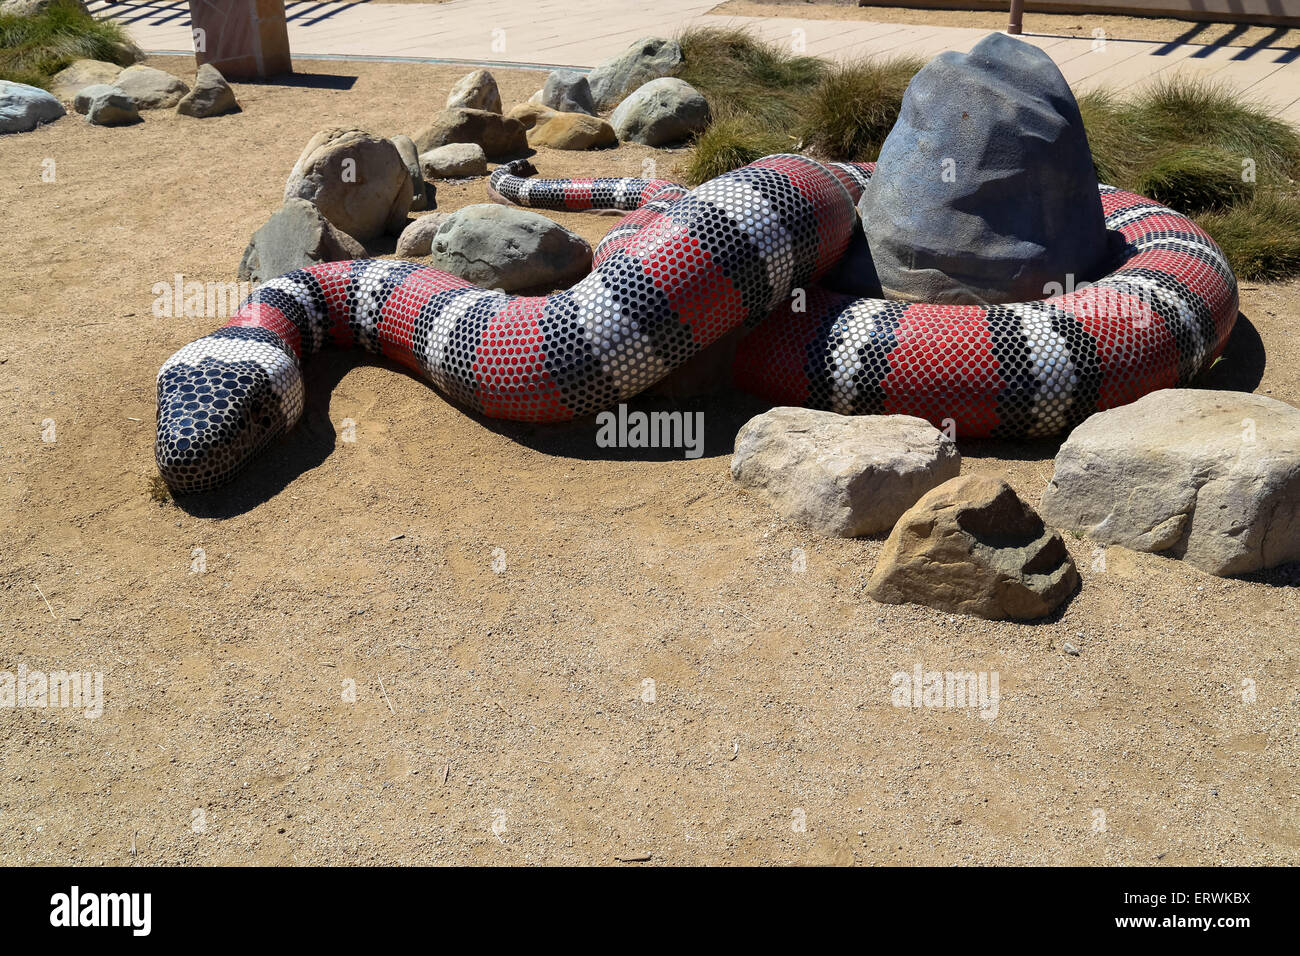 California Mountain Snake King Sculpture à Malibu, en Californie. Banque D'Images